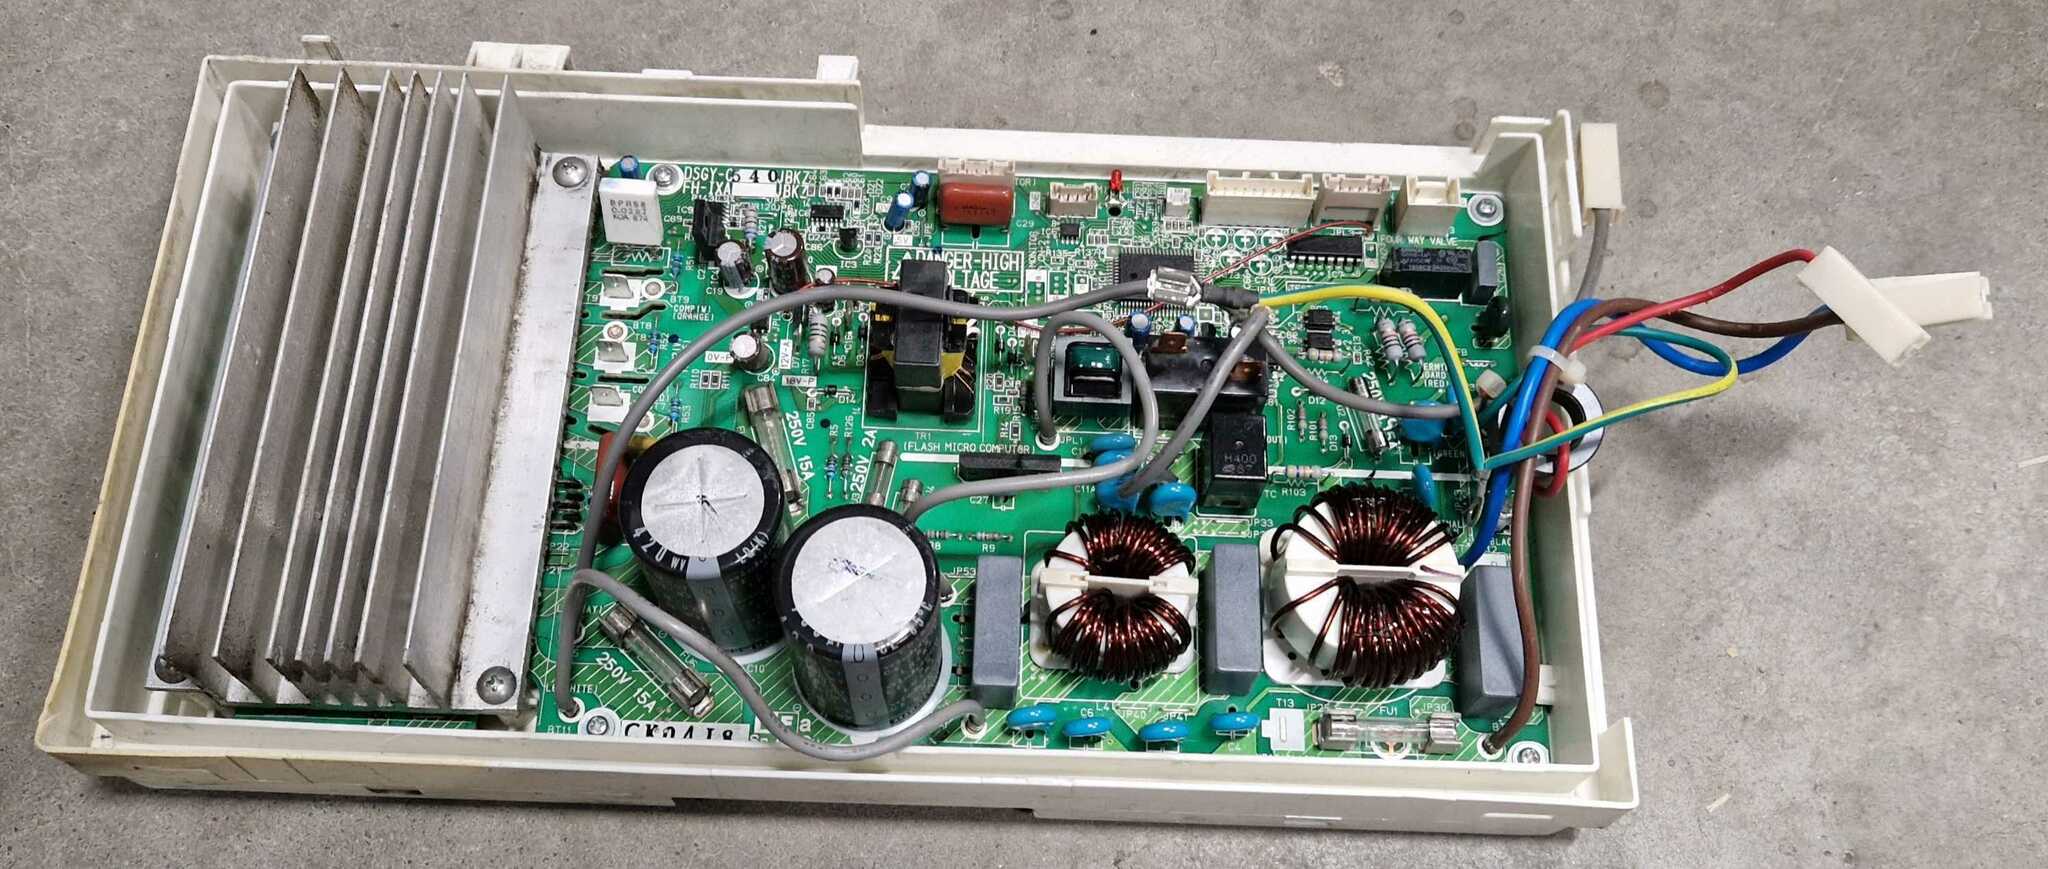 PCB for IVT Bosch Heat Pumps (8738201449)